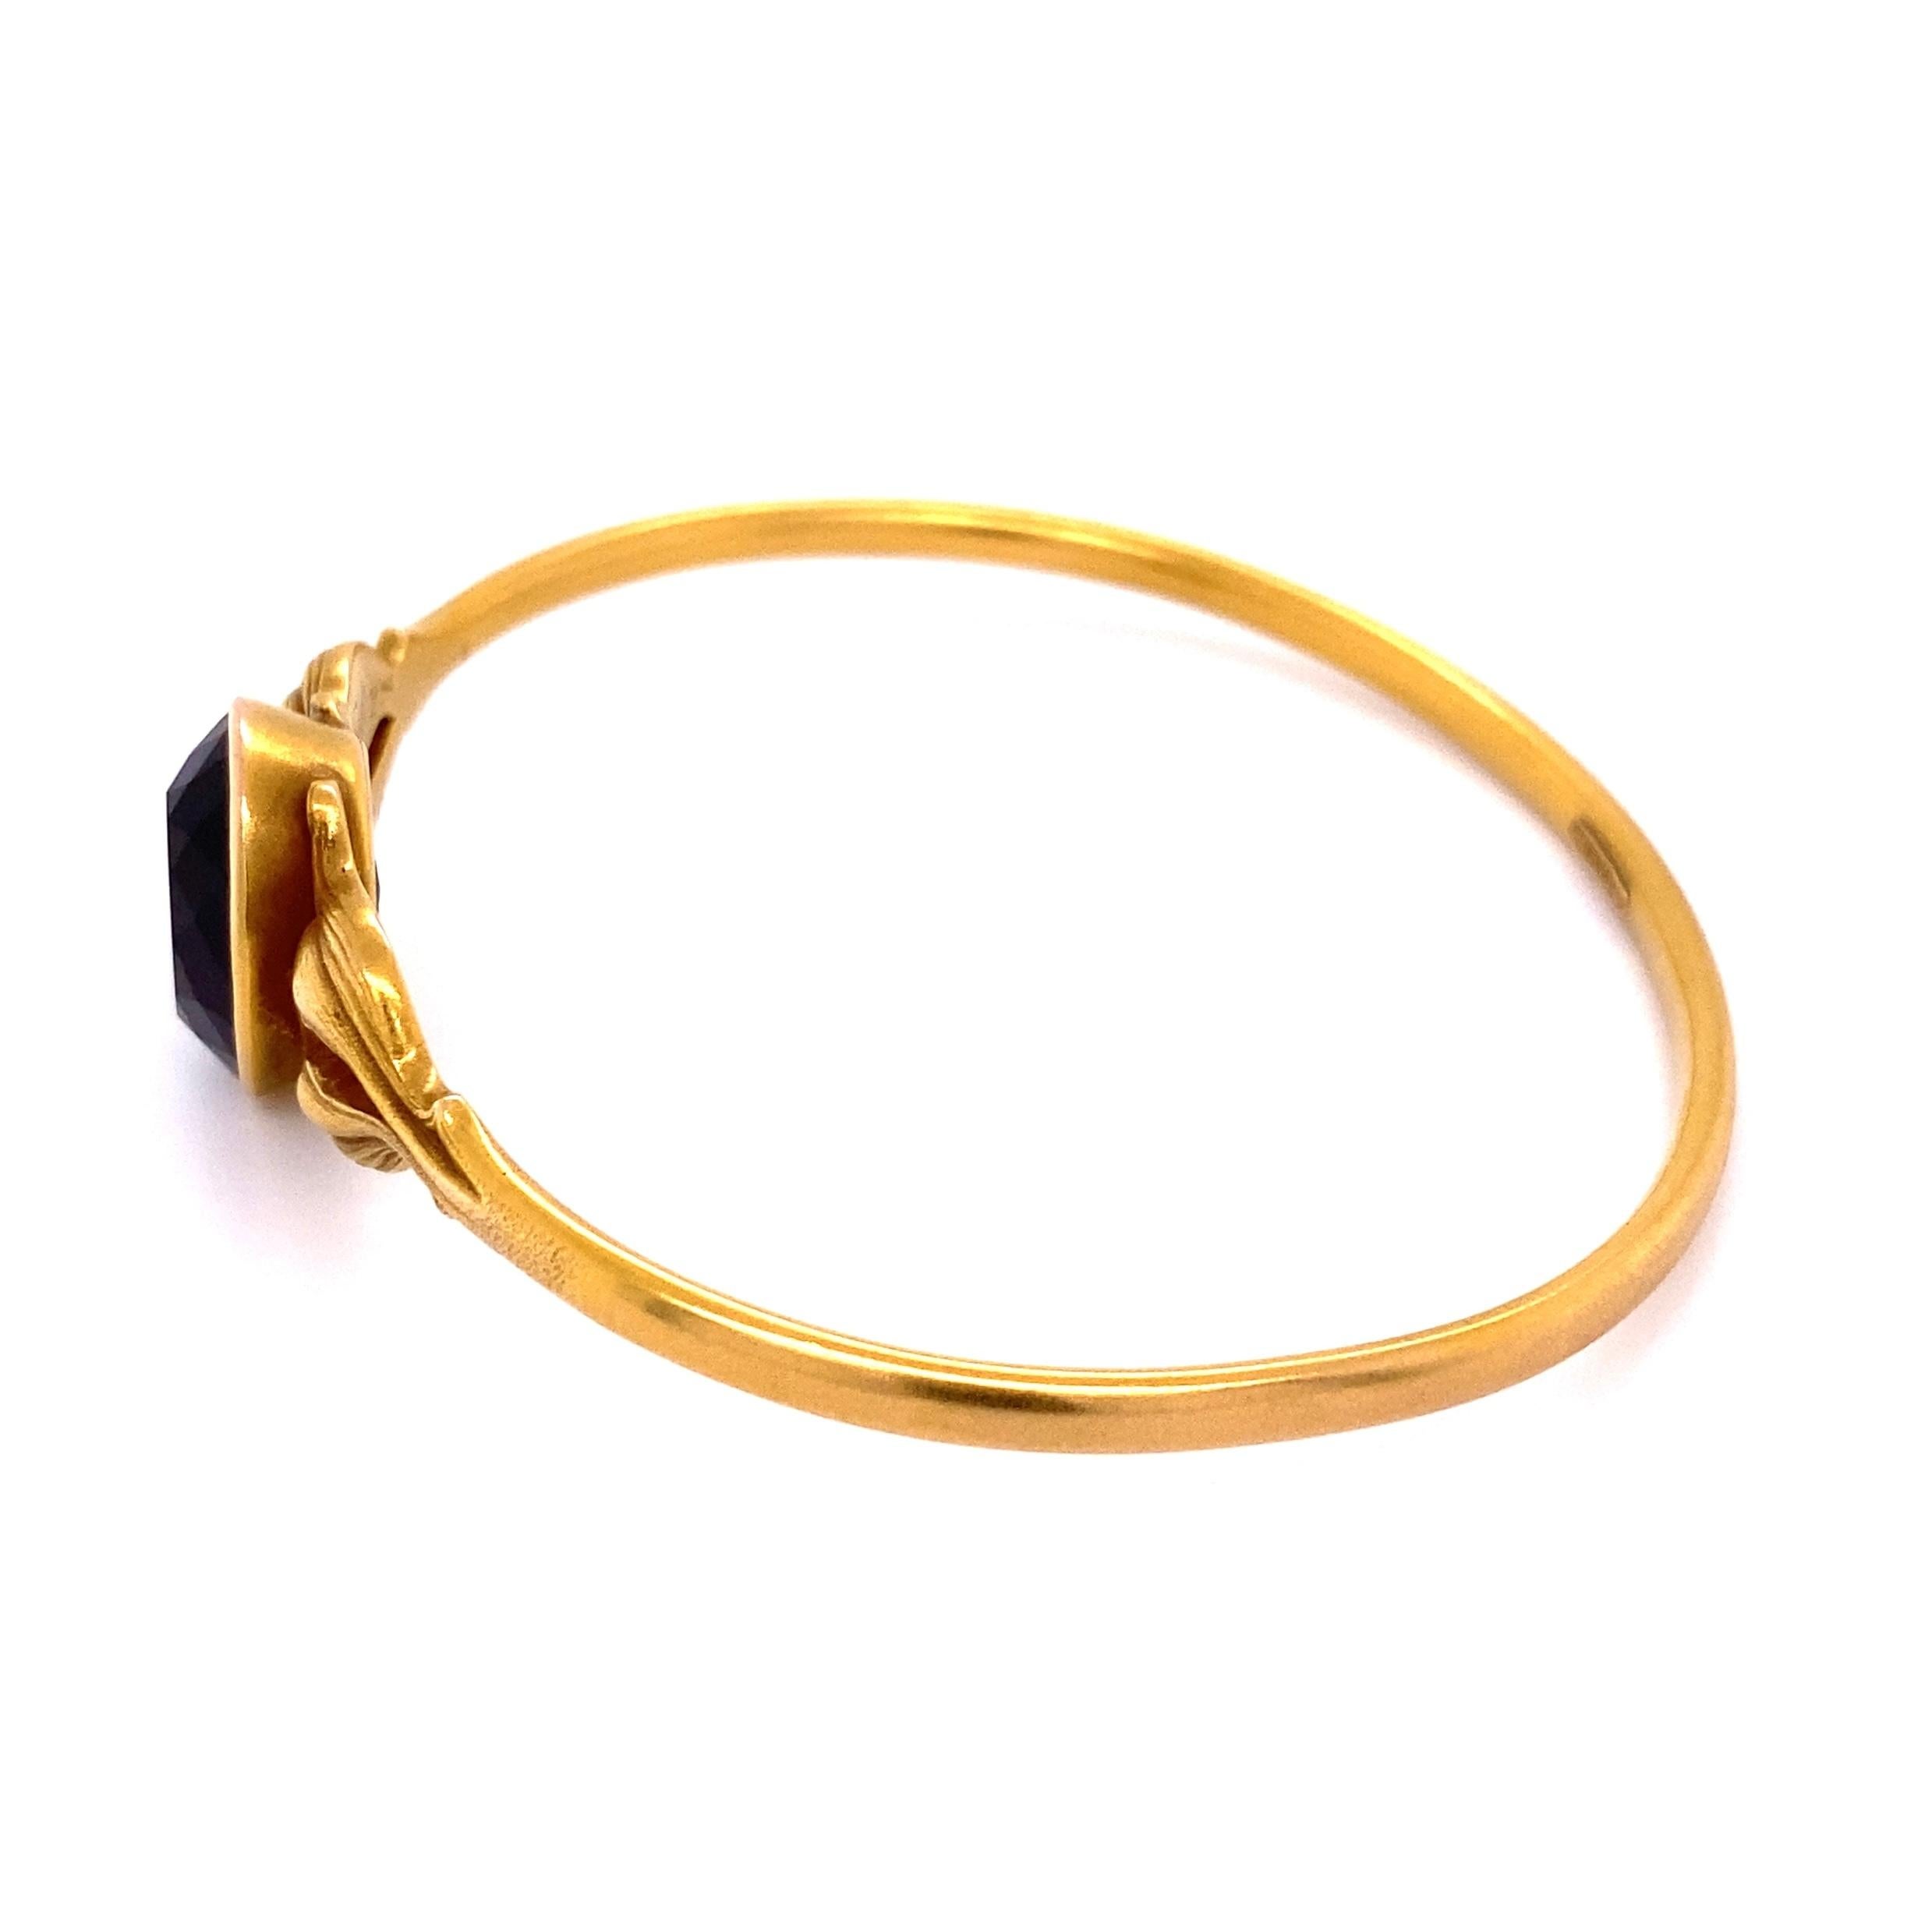 Shreve & Co Amethyst Gold Bangle Bracelet Circa 1906 Estate Fine Jewelry 1